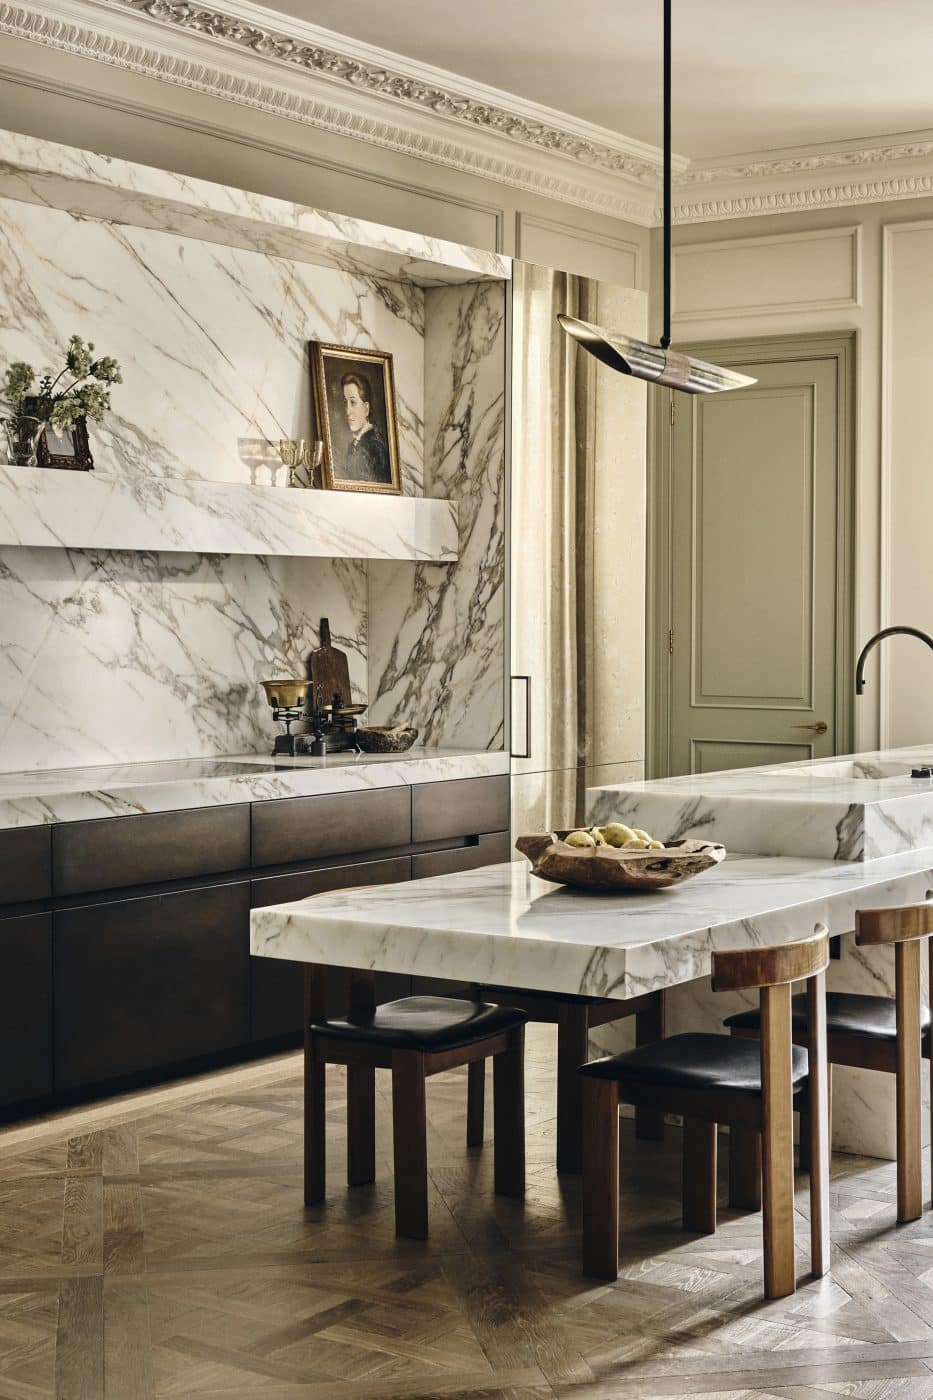 Banda interior design studio chelsea London kitchen in white and gray veined marble